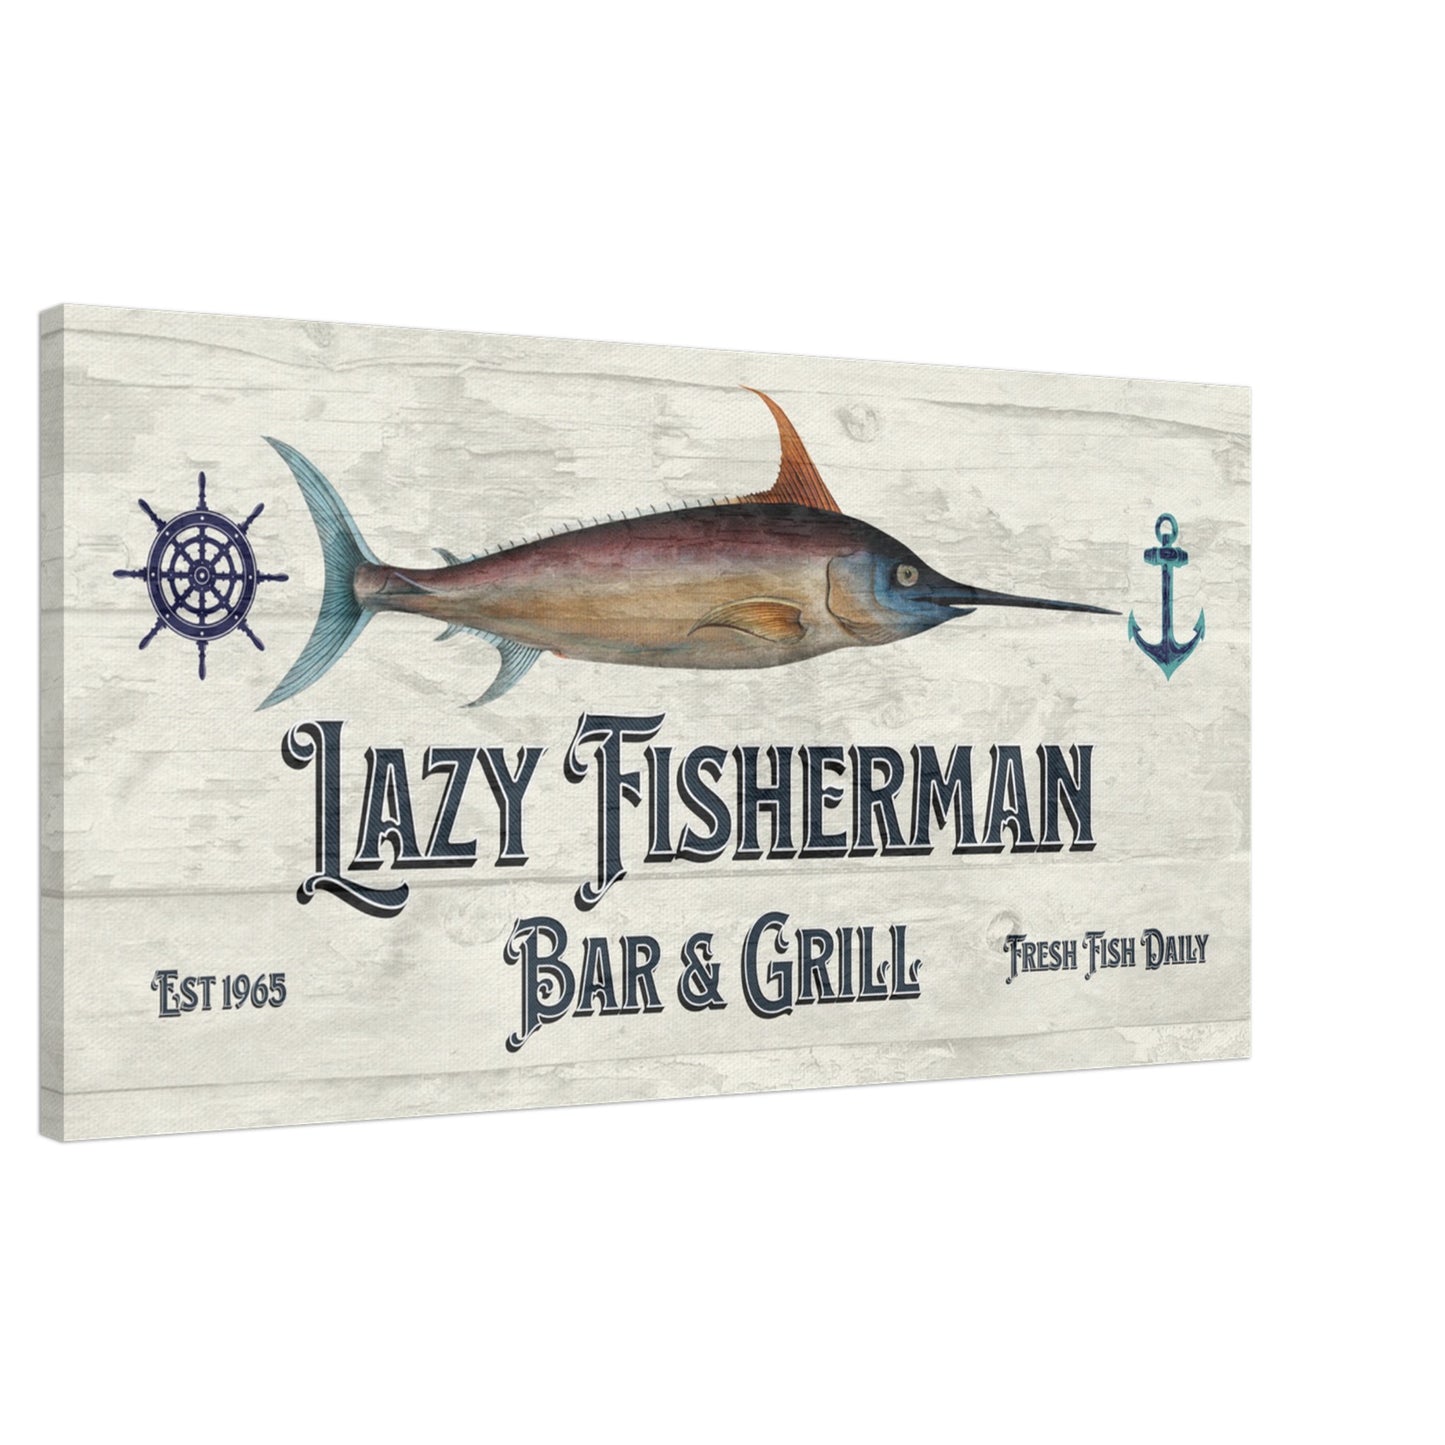 Lazy Fisherman Bar & Grill Canvas Wall Print Caribbean Rays